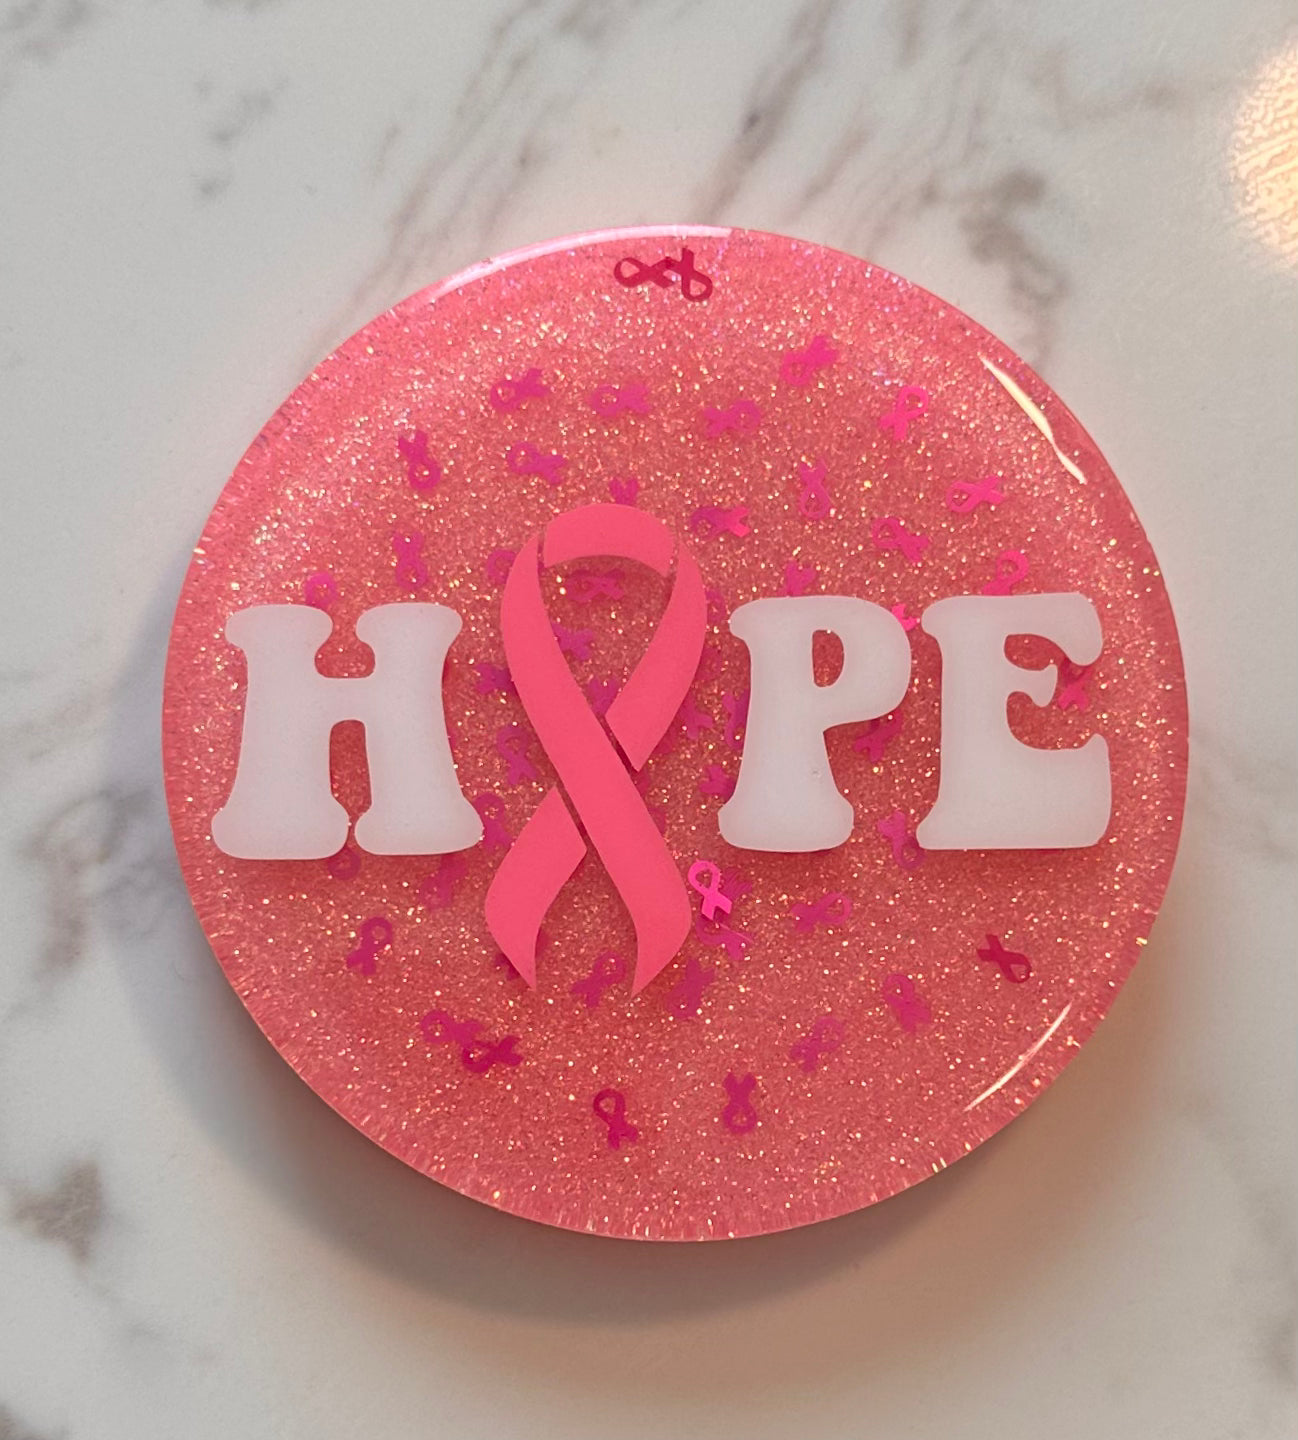 *HOPE* Breast Cancer Awareness Coaster